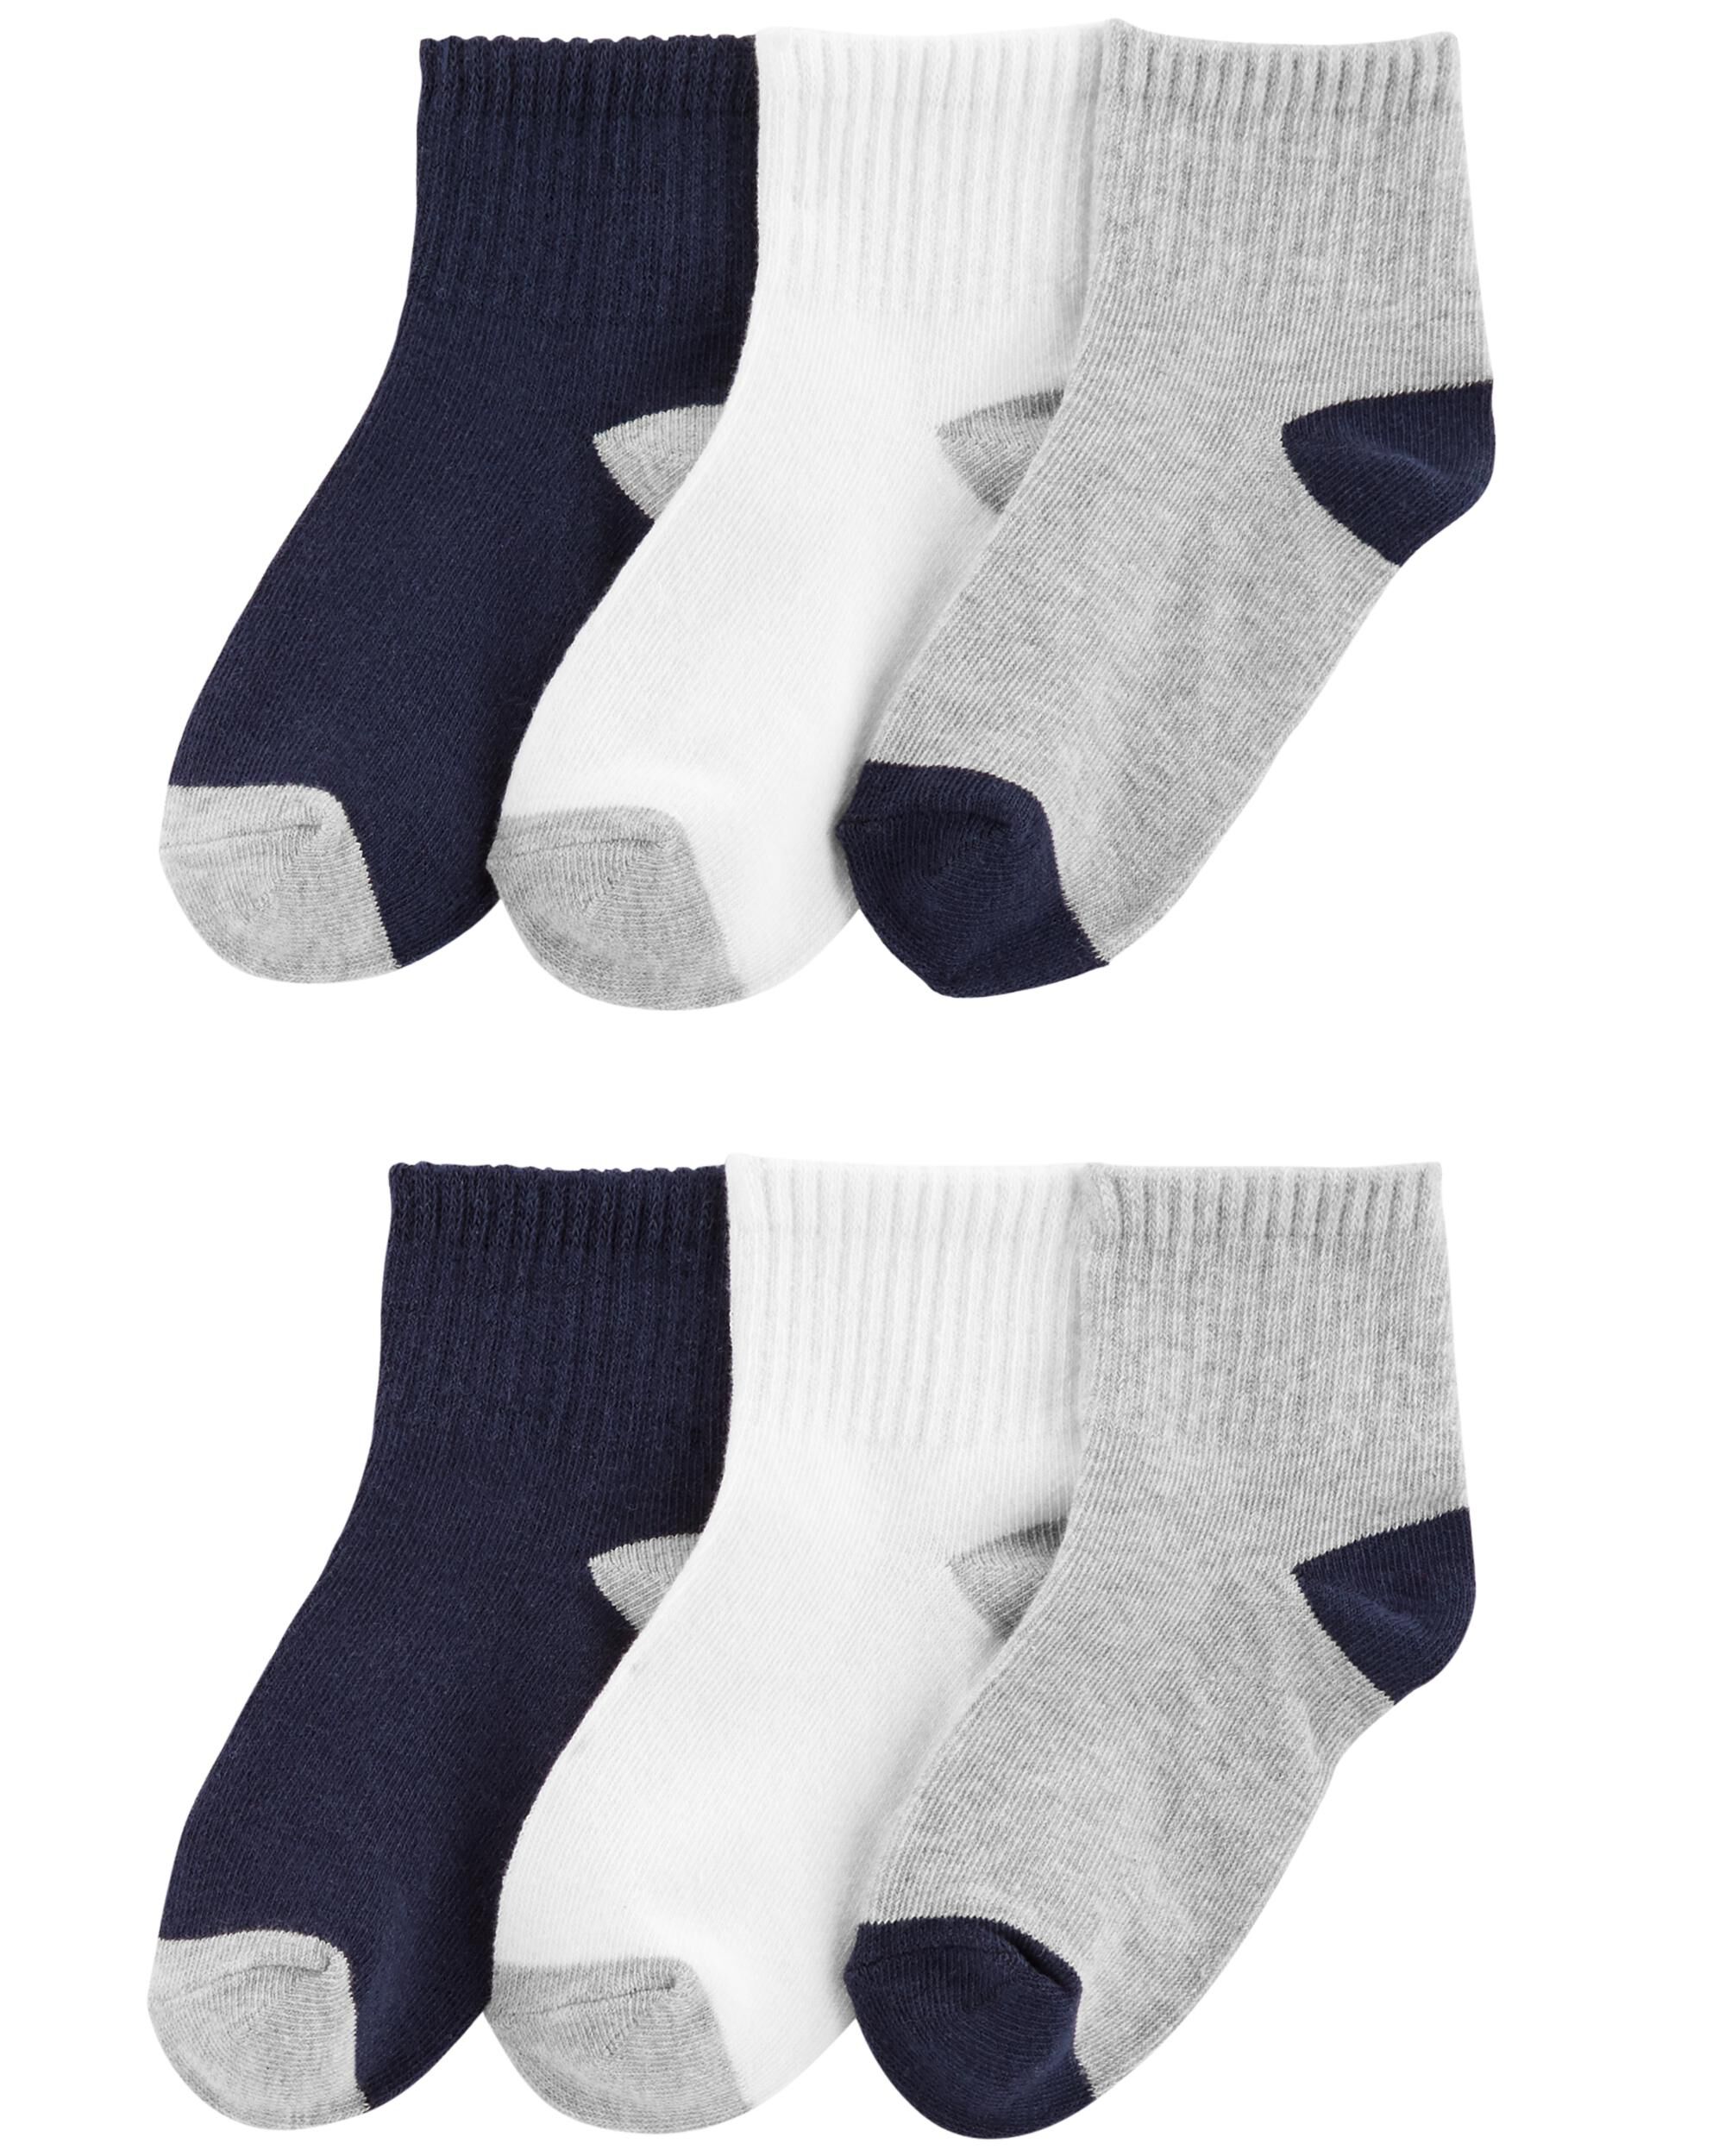 Carters Socks Size Chart